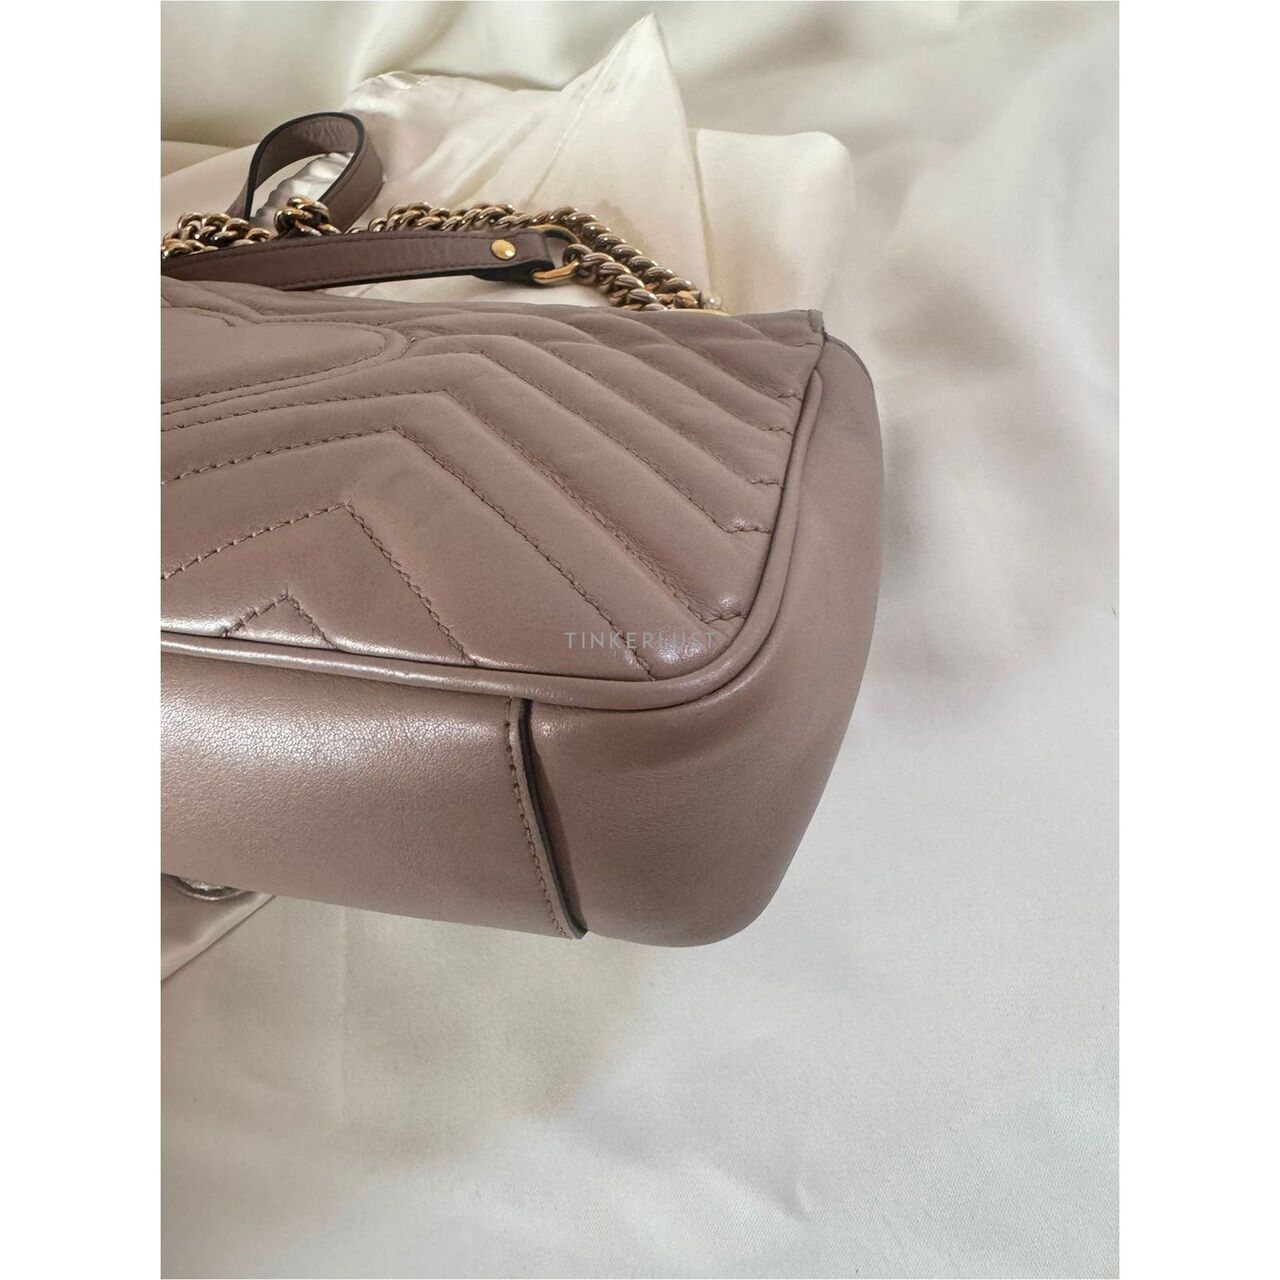 Gucci GG Marmont Matelasse Small Flap 2019 Shoulder Bag